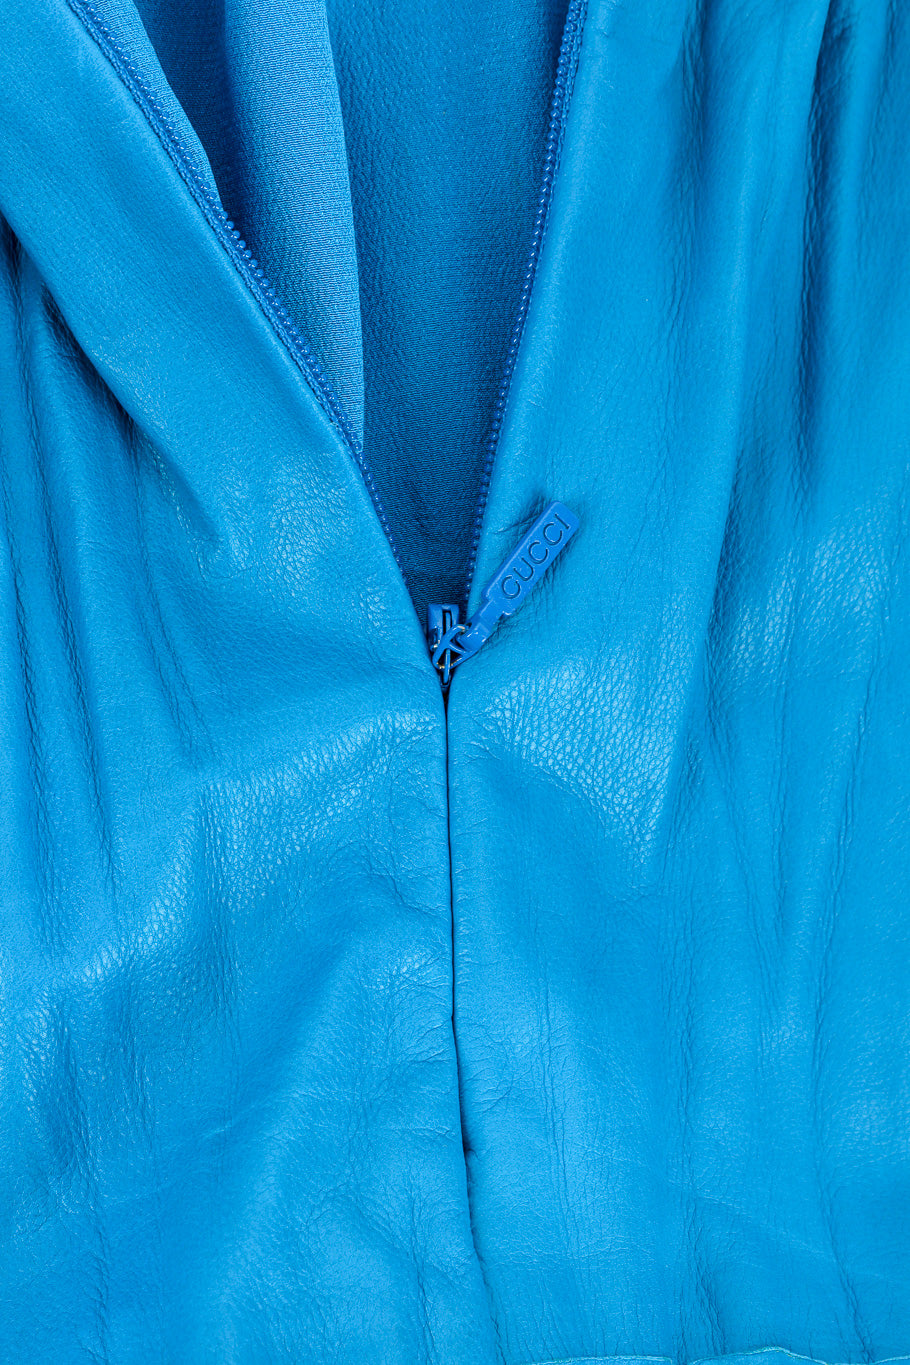 Gucci Sleeveless Pleated Leather Dress zipper closure closeup @recessla